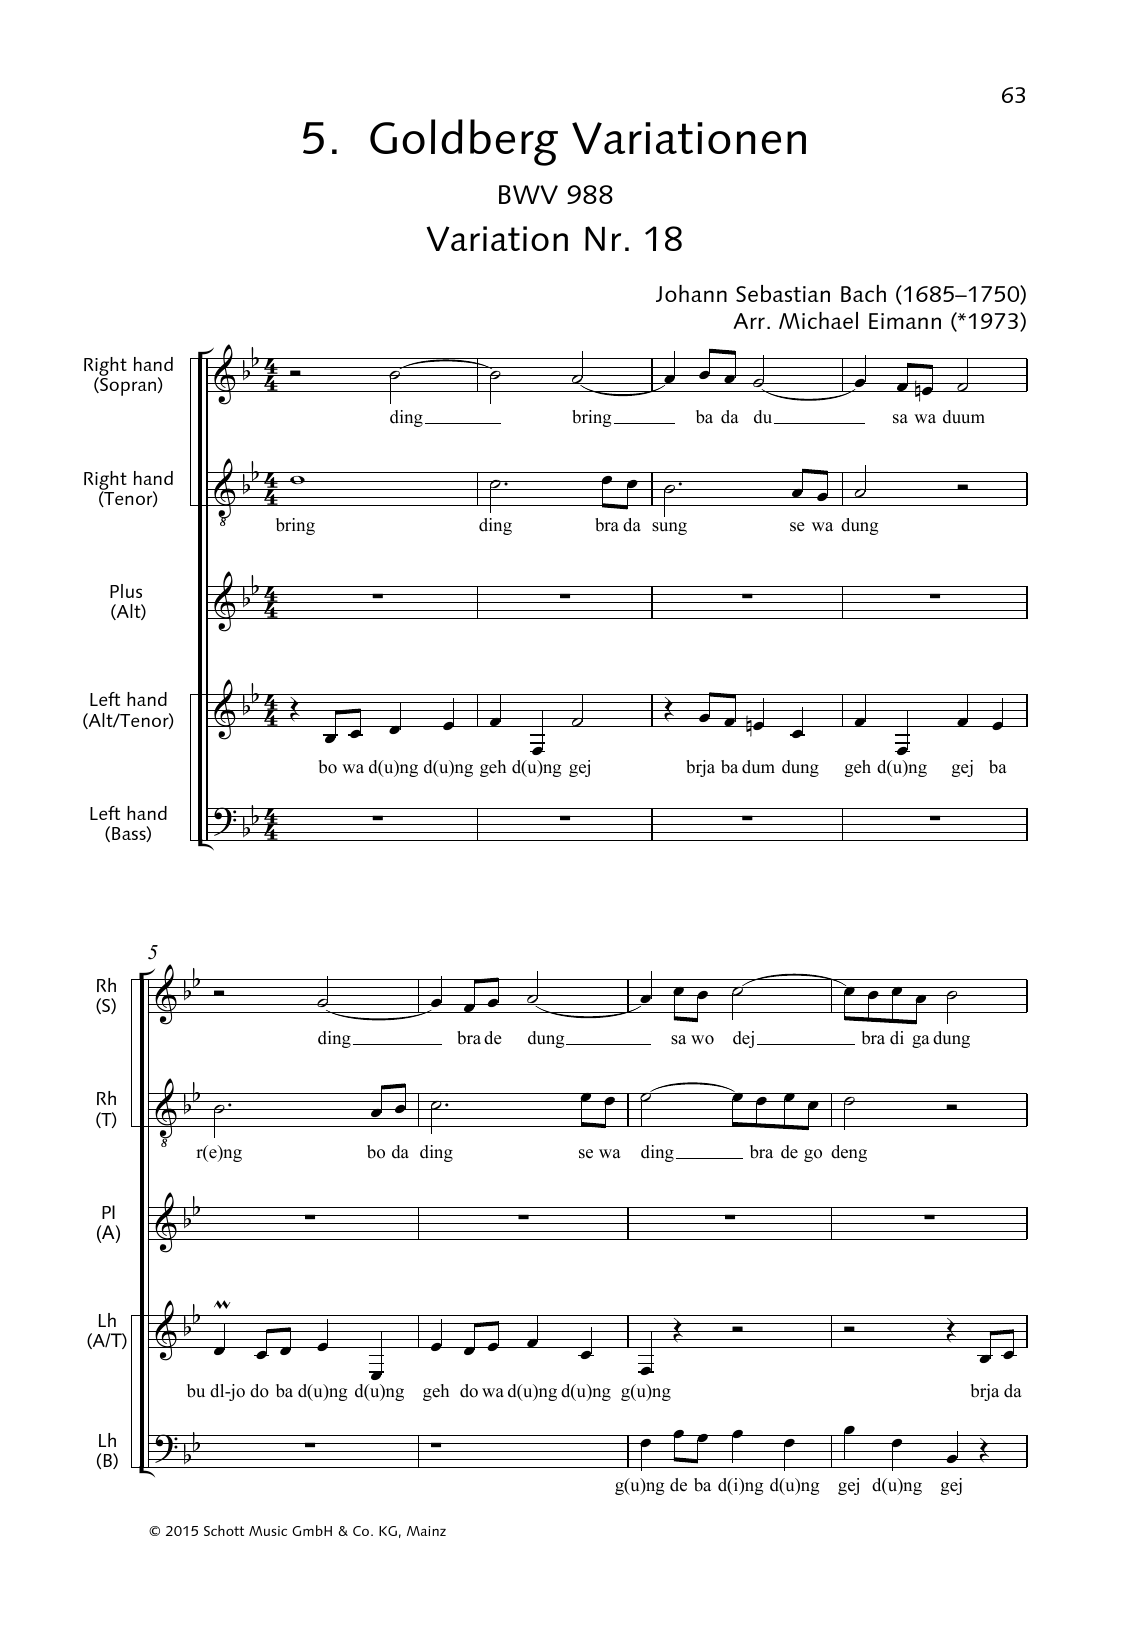 Download Johann Sebastian Bach Goldberg Variations, Variation No. 18 Sheet Music and learn how to play Choir PDF digital score in minutes